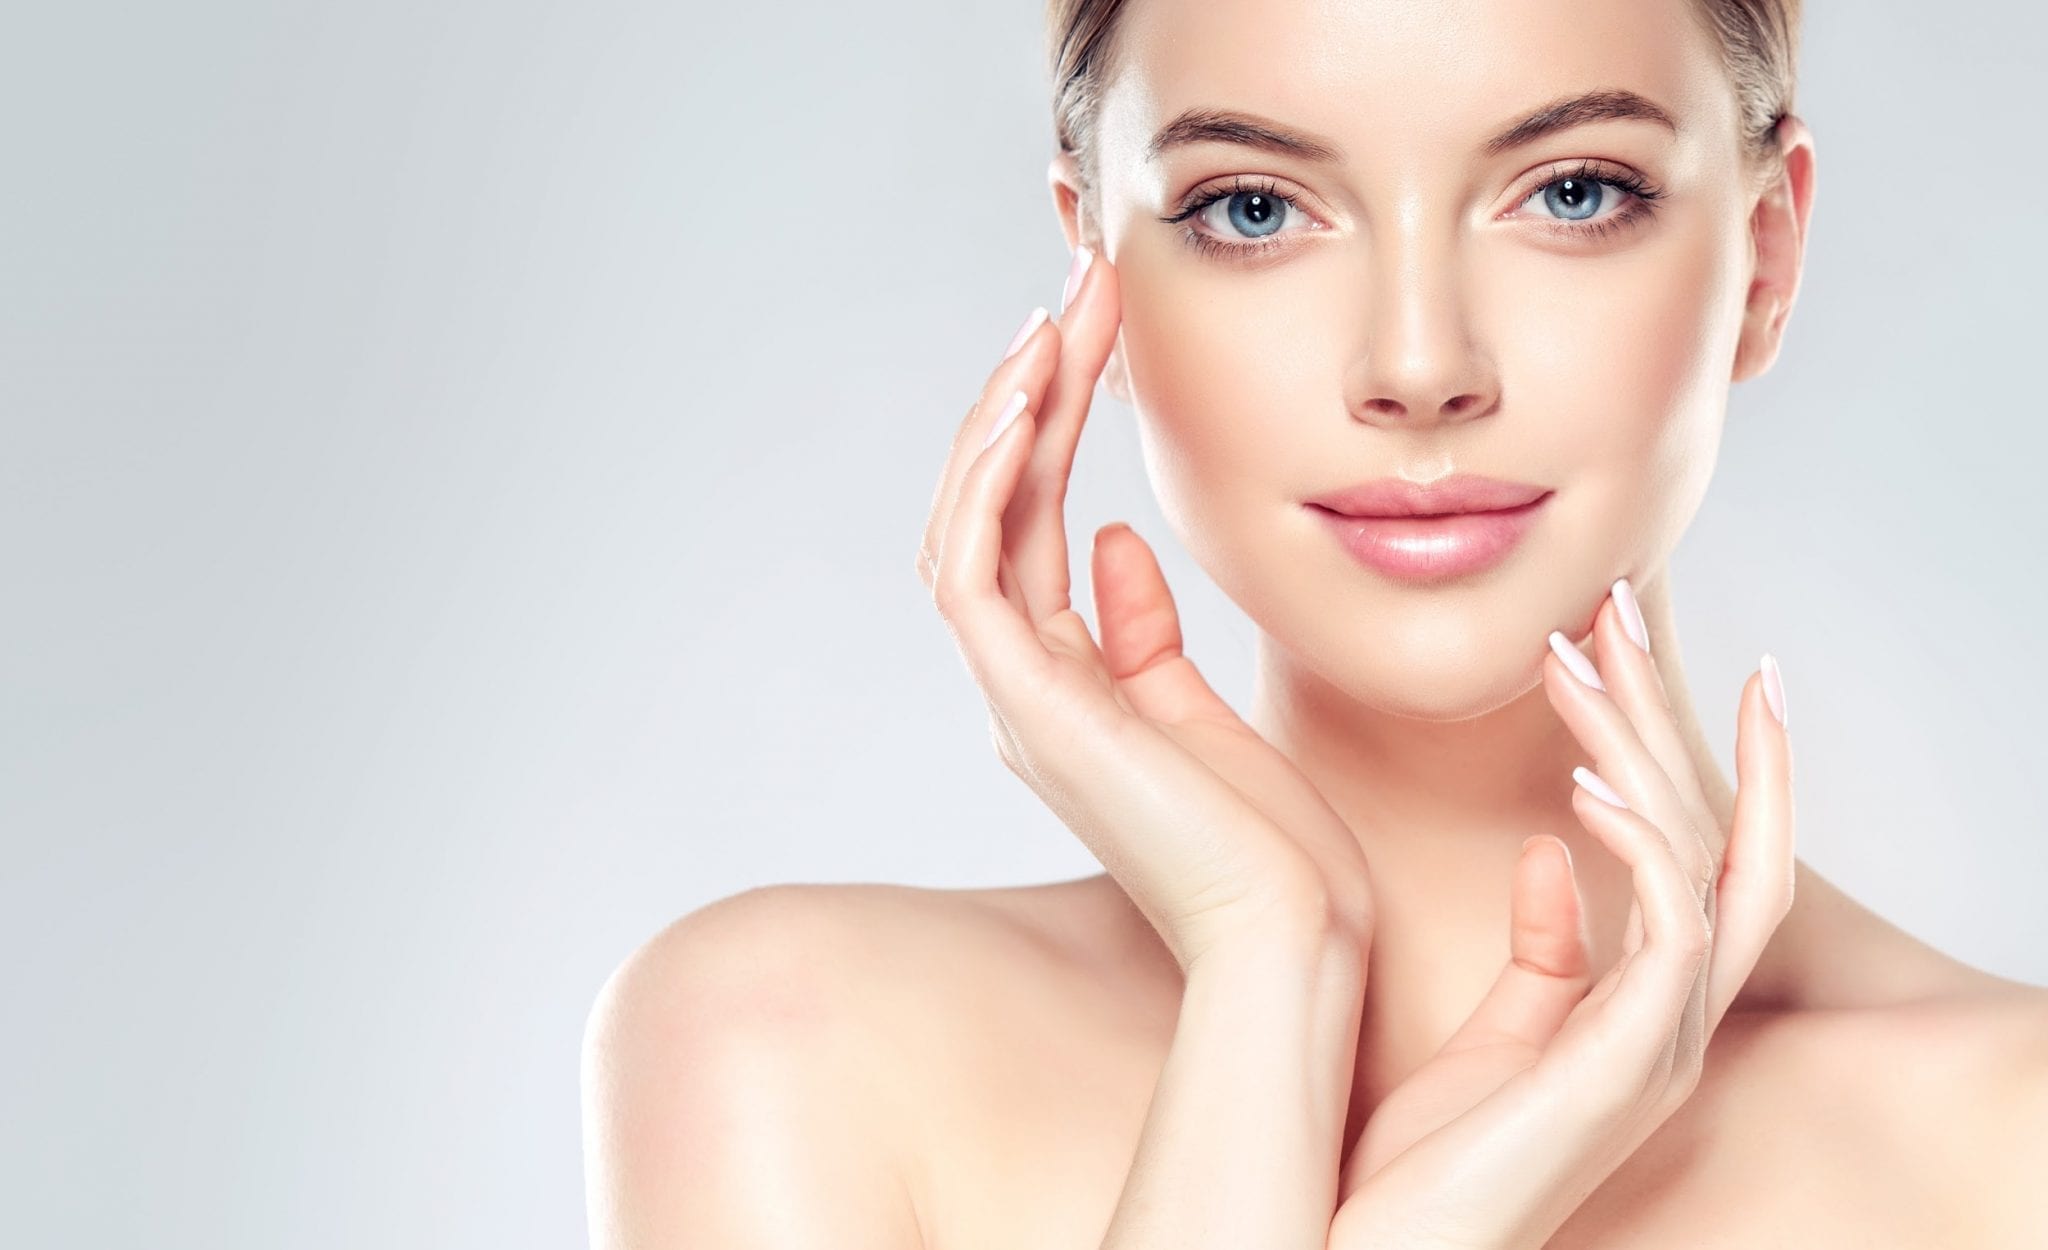 Mikä on ihoa uudistava voide?